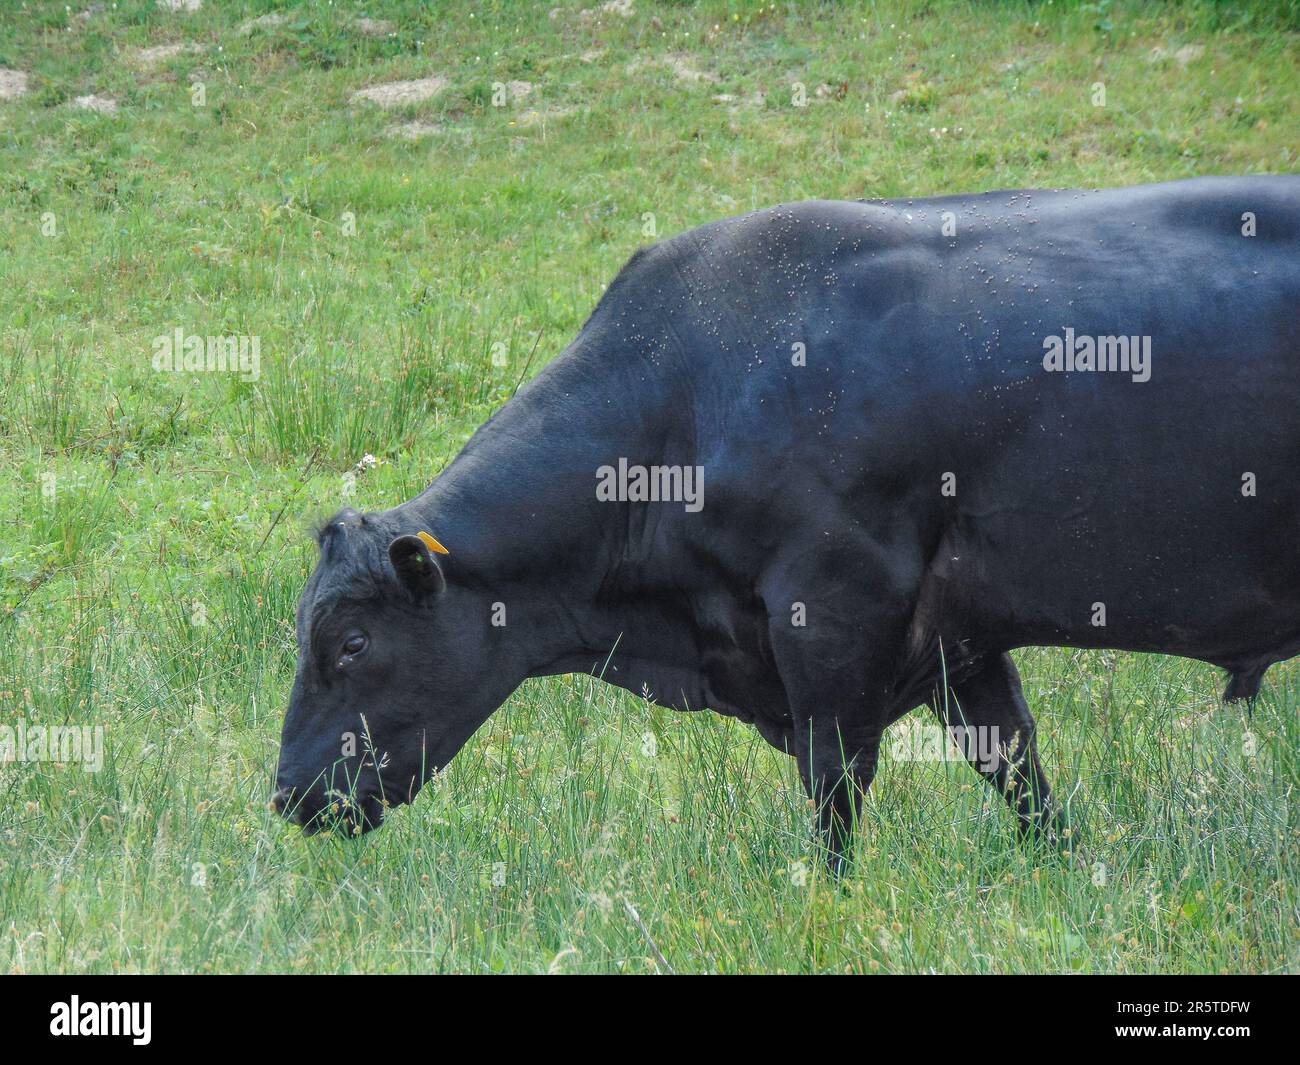 A black angus bull grazes grass Stock Photo